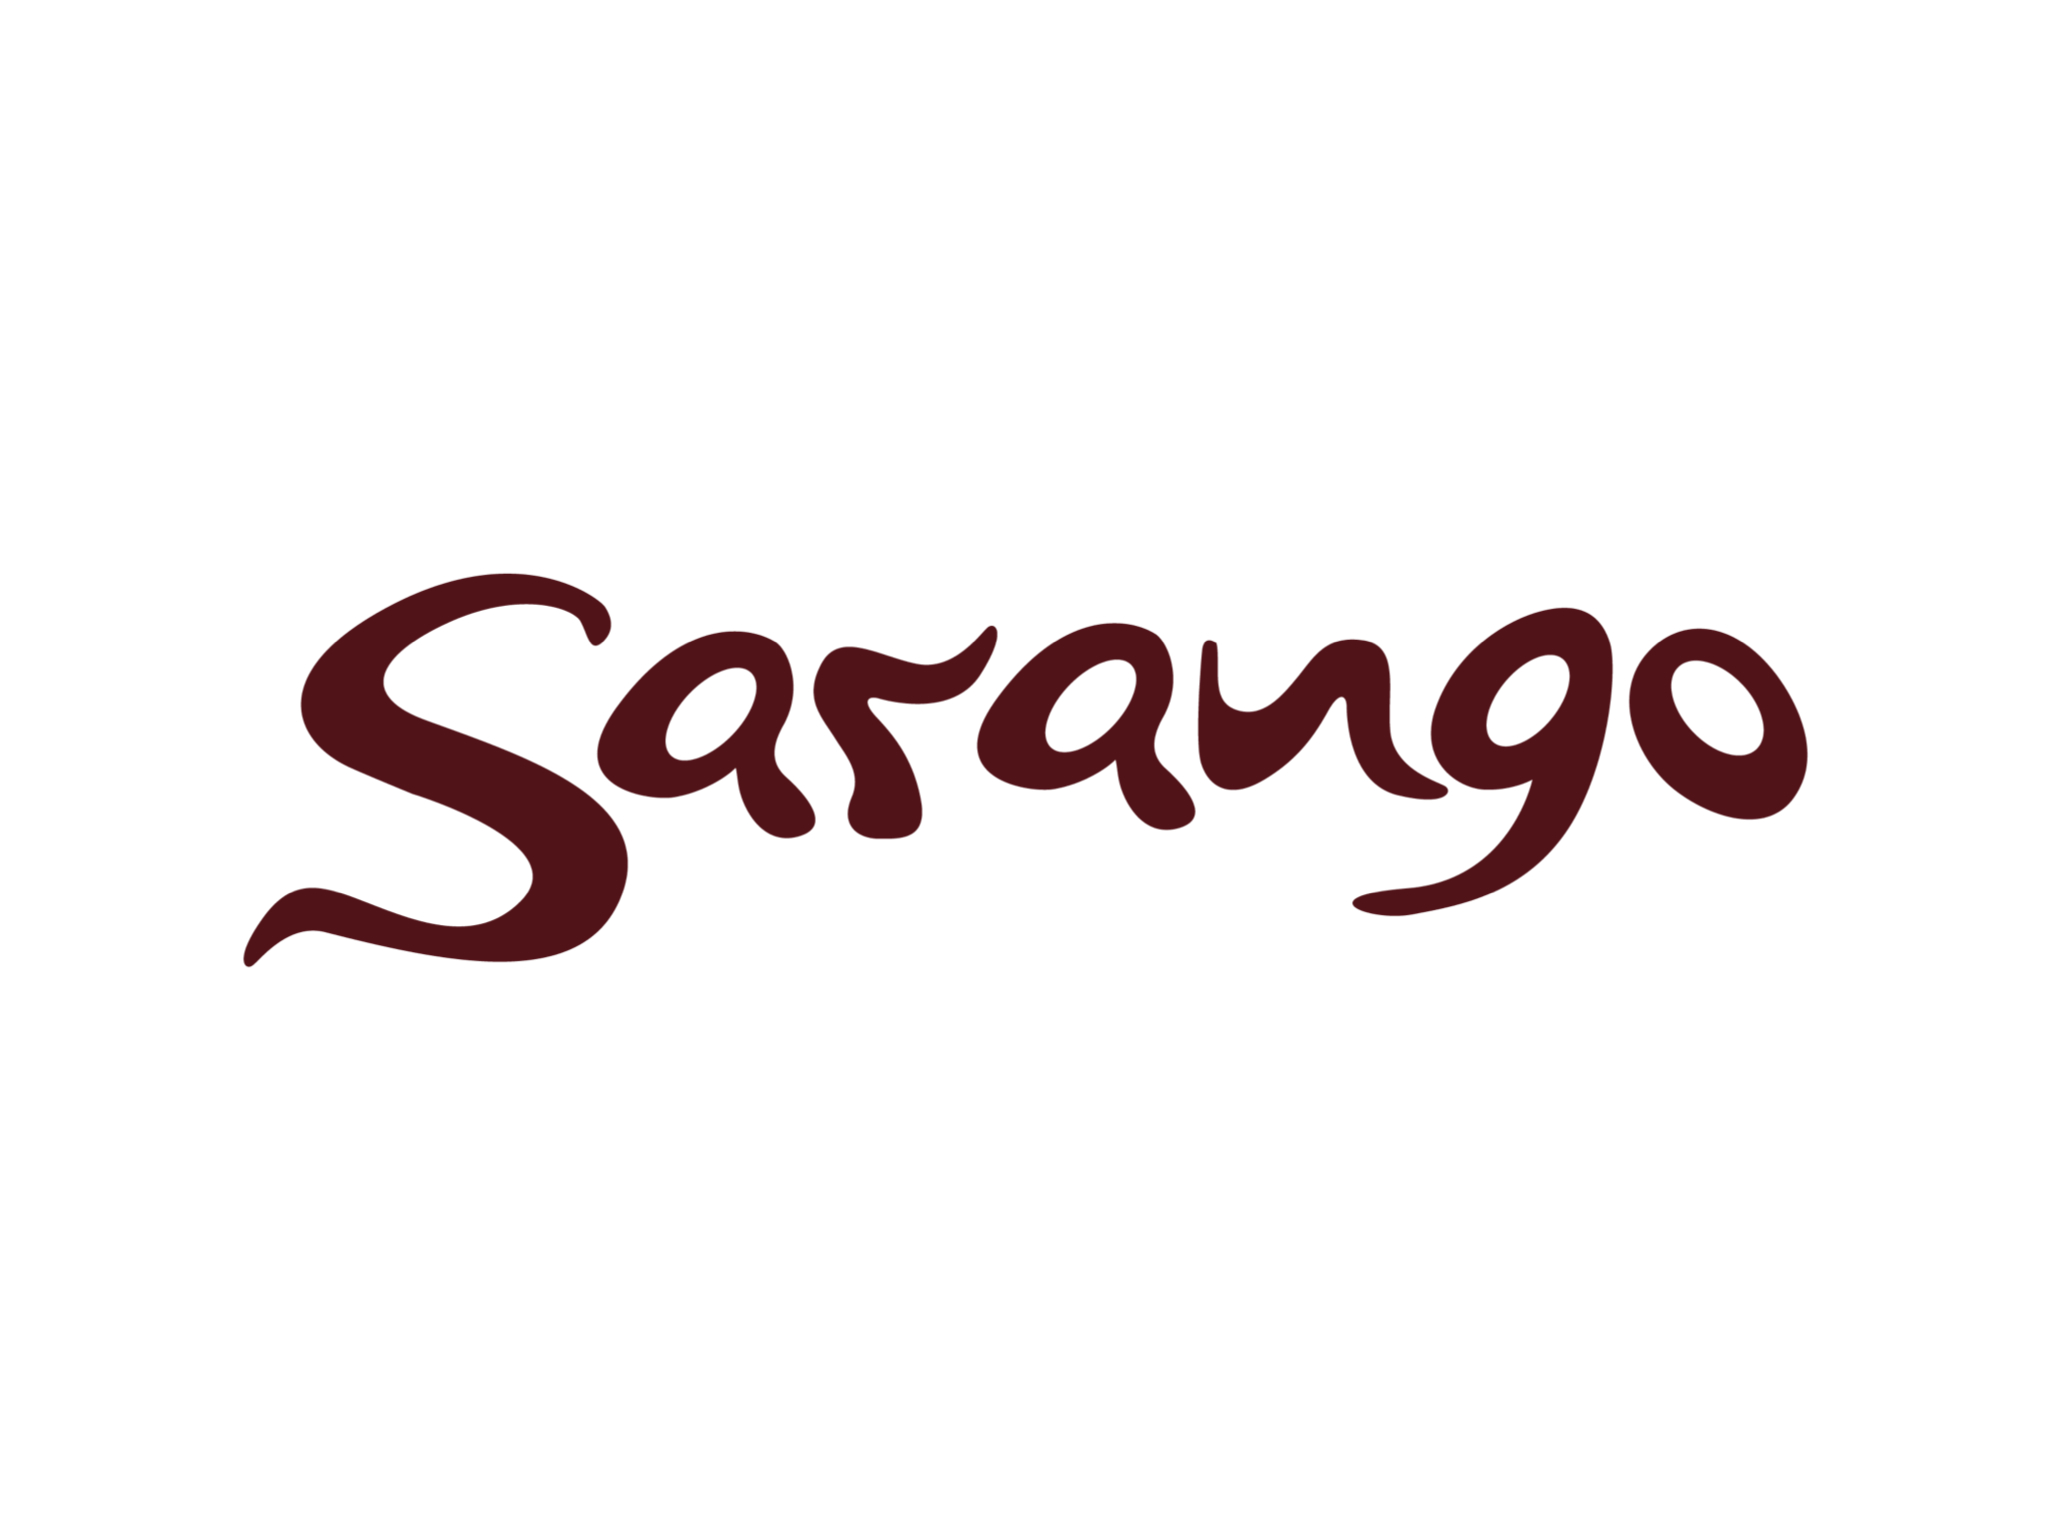 Sarango